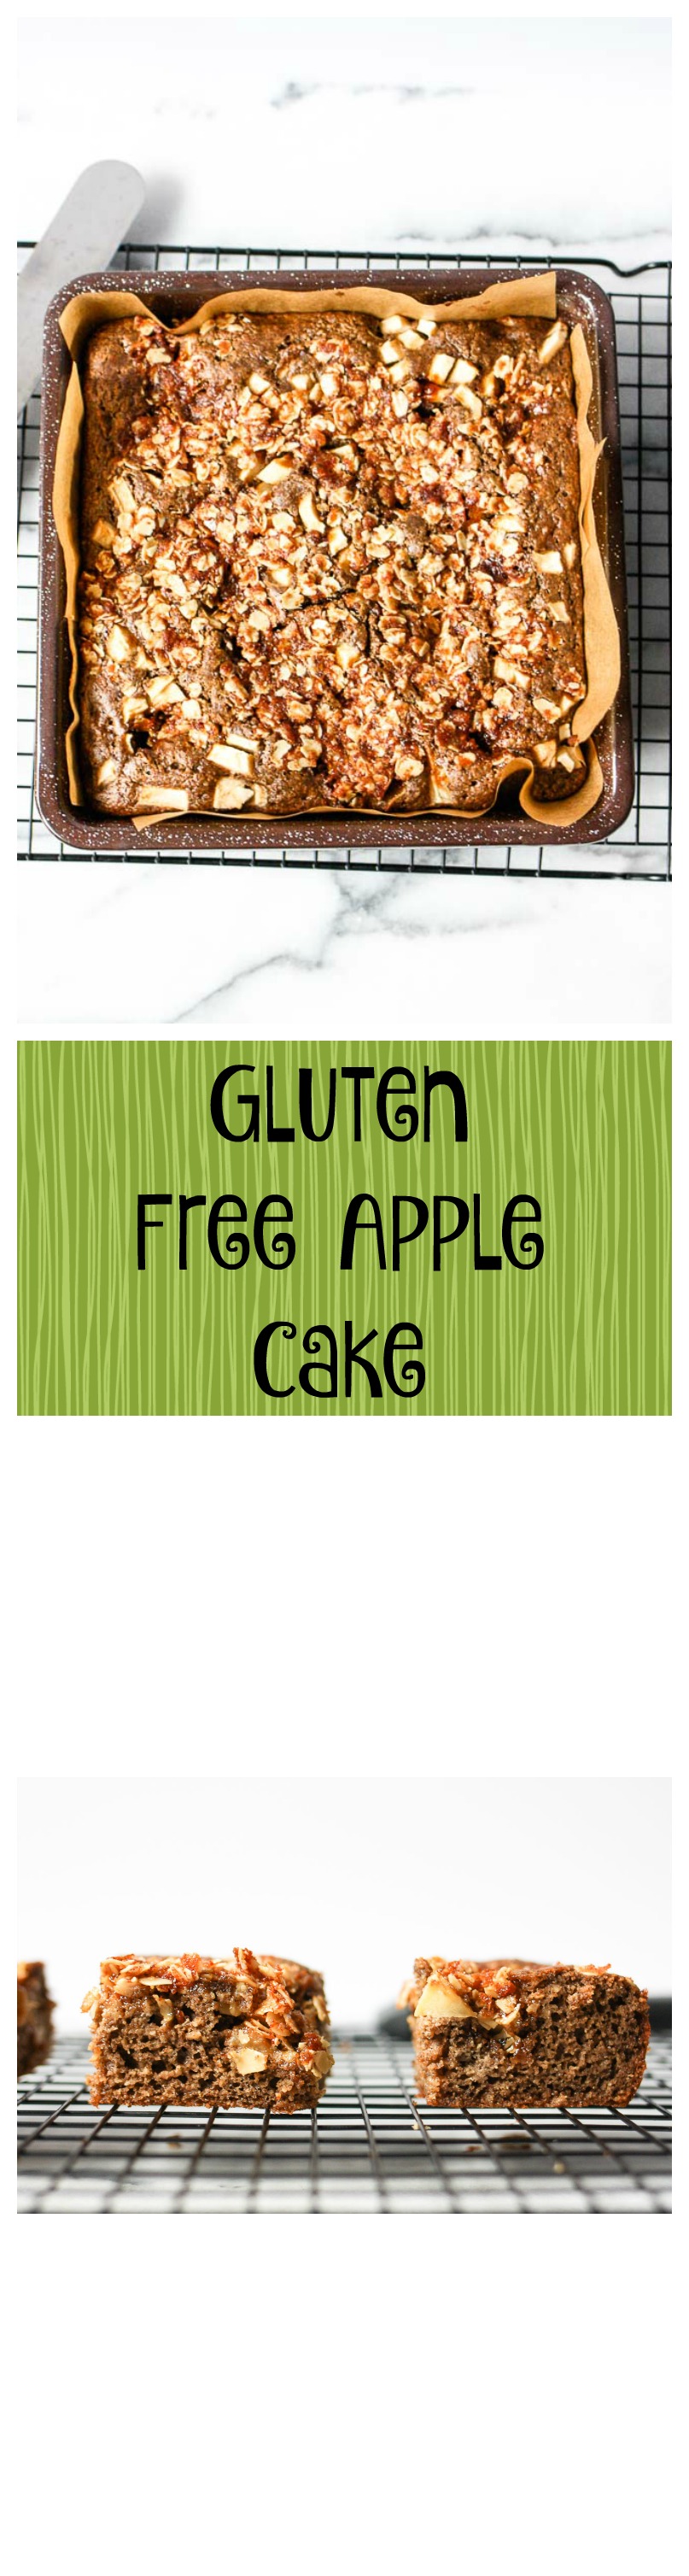 gluten free apple cake